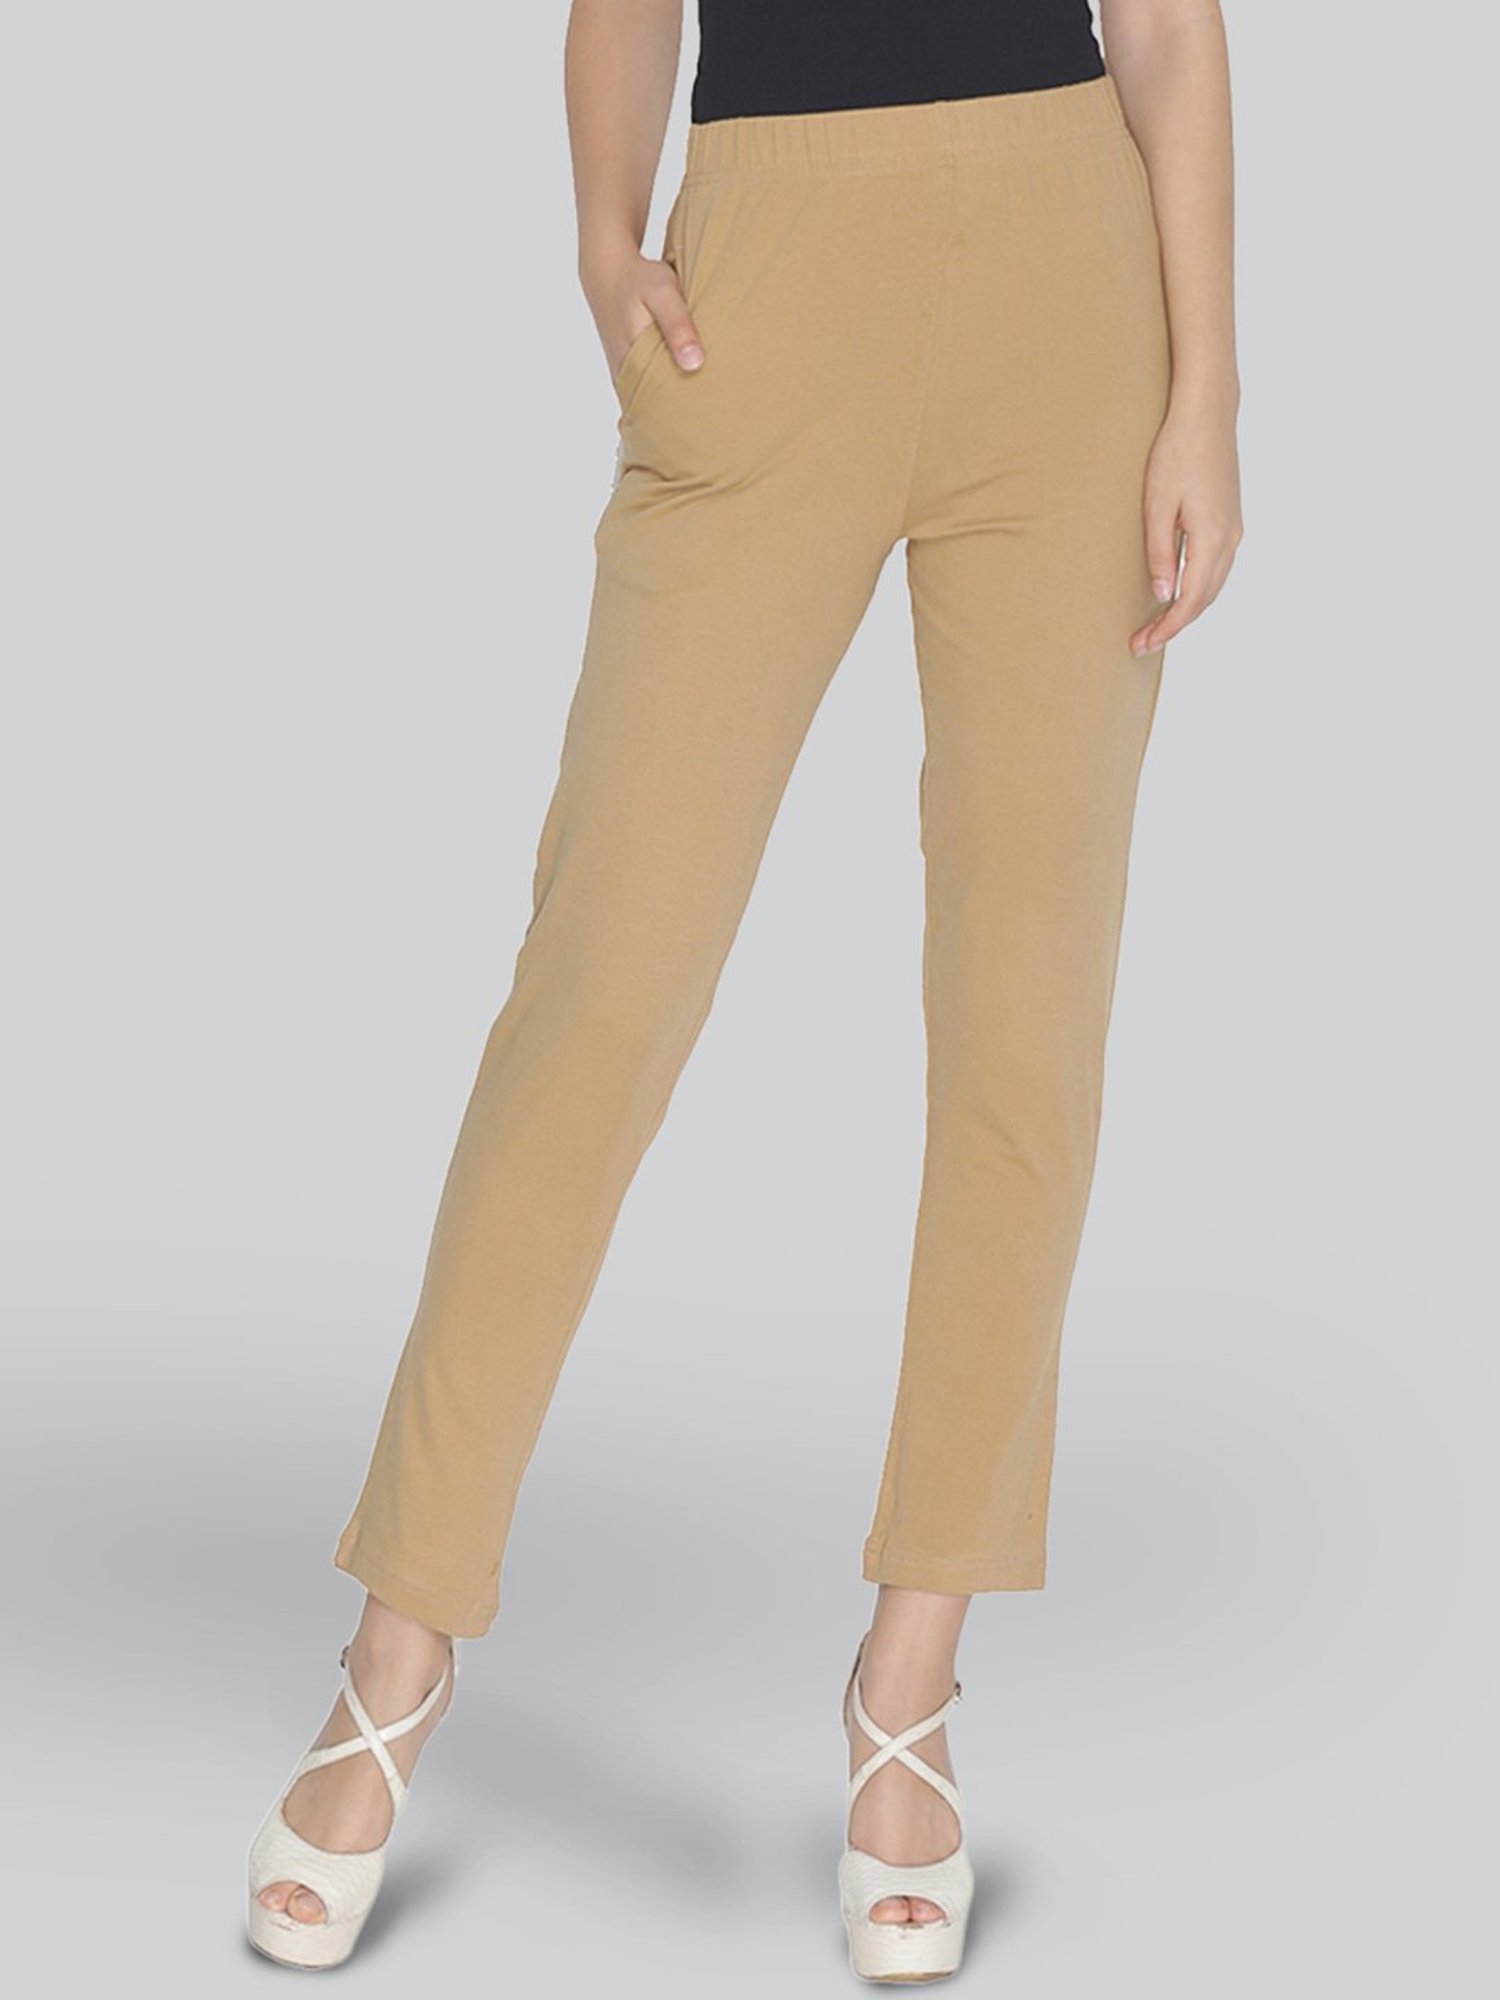 Plain Ladies Cotton Ankle Pant, Waist Size: 32.0 at Rs 295/piece in New  Delhi